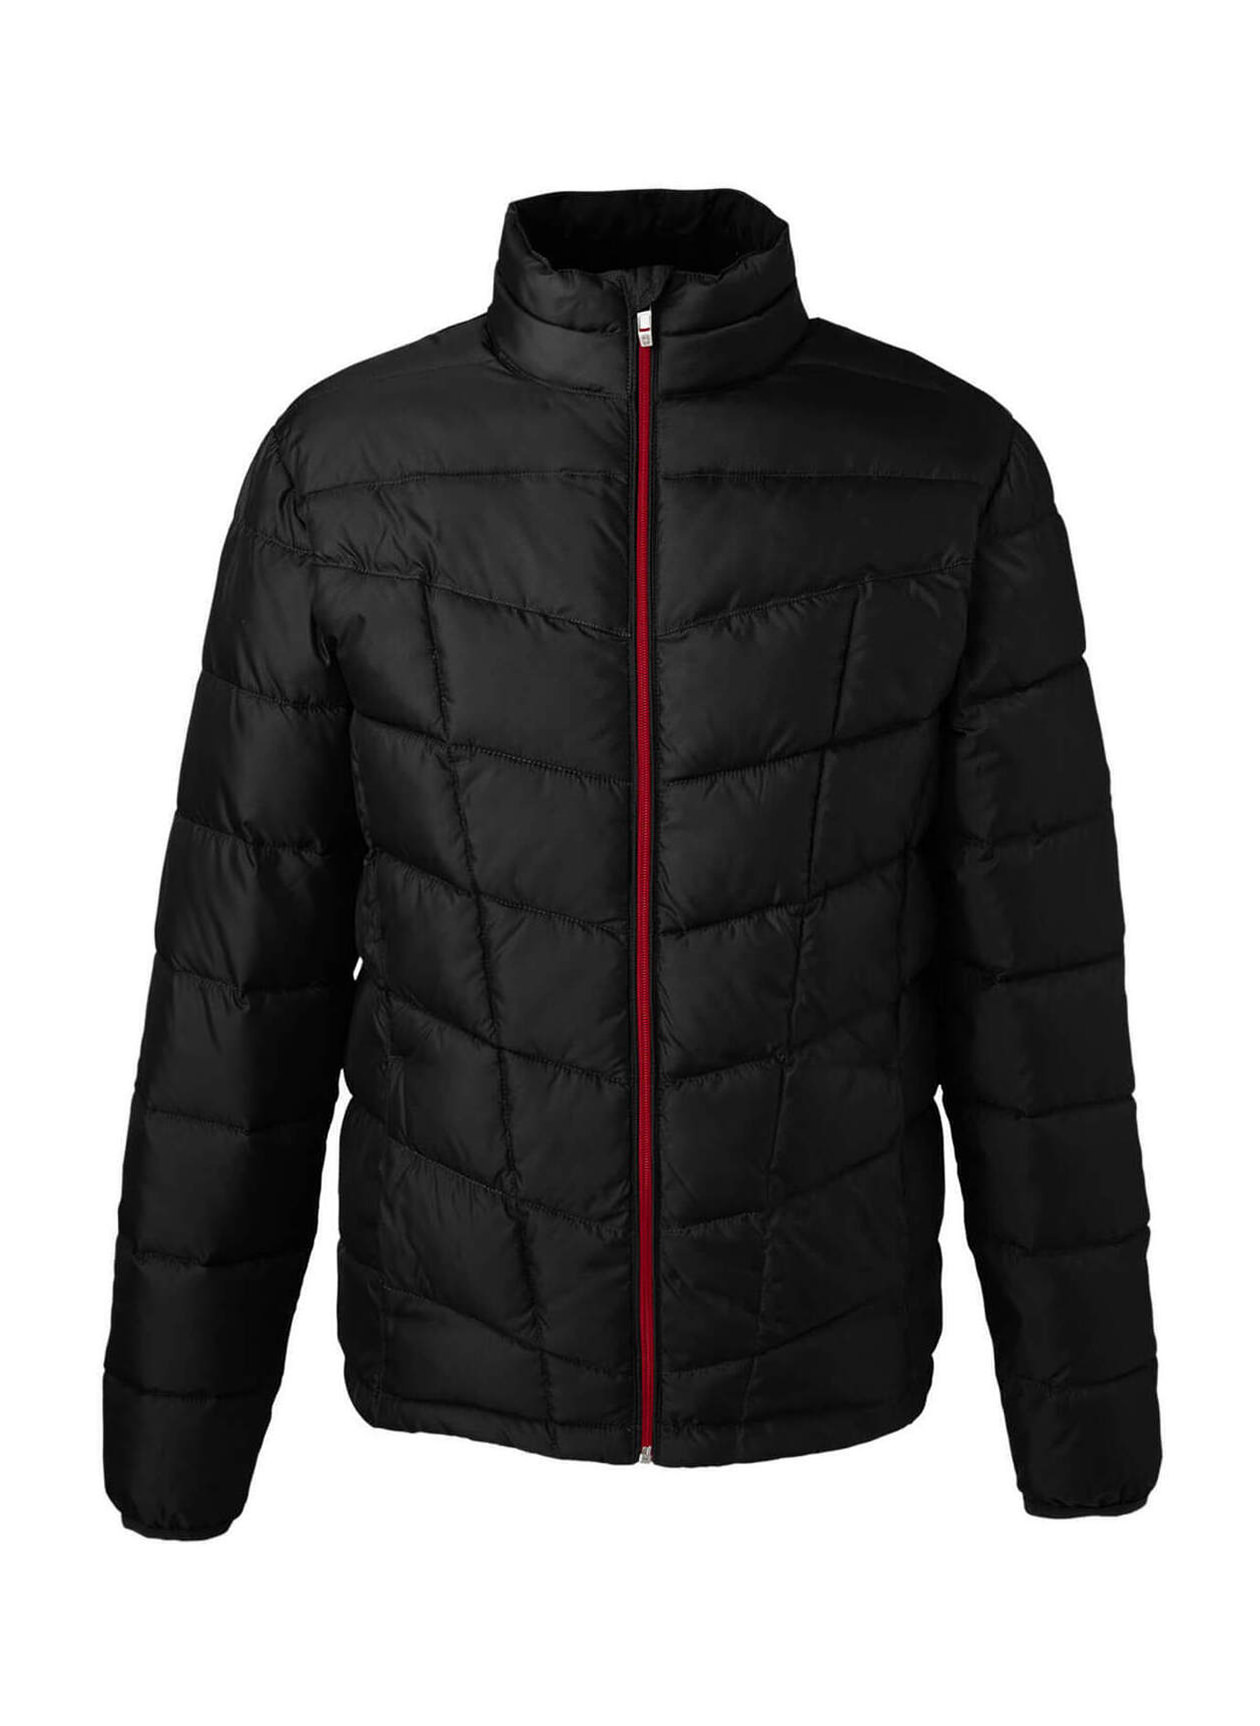 Corporate Spyder Men's Black-Red Pelmo Insulated Puffer Jacket